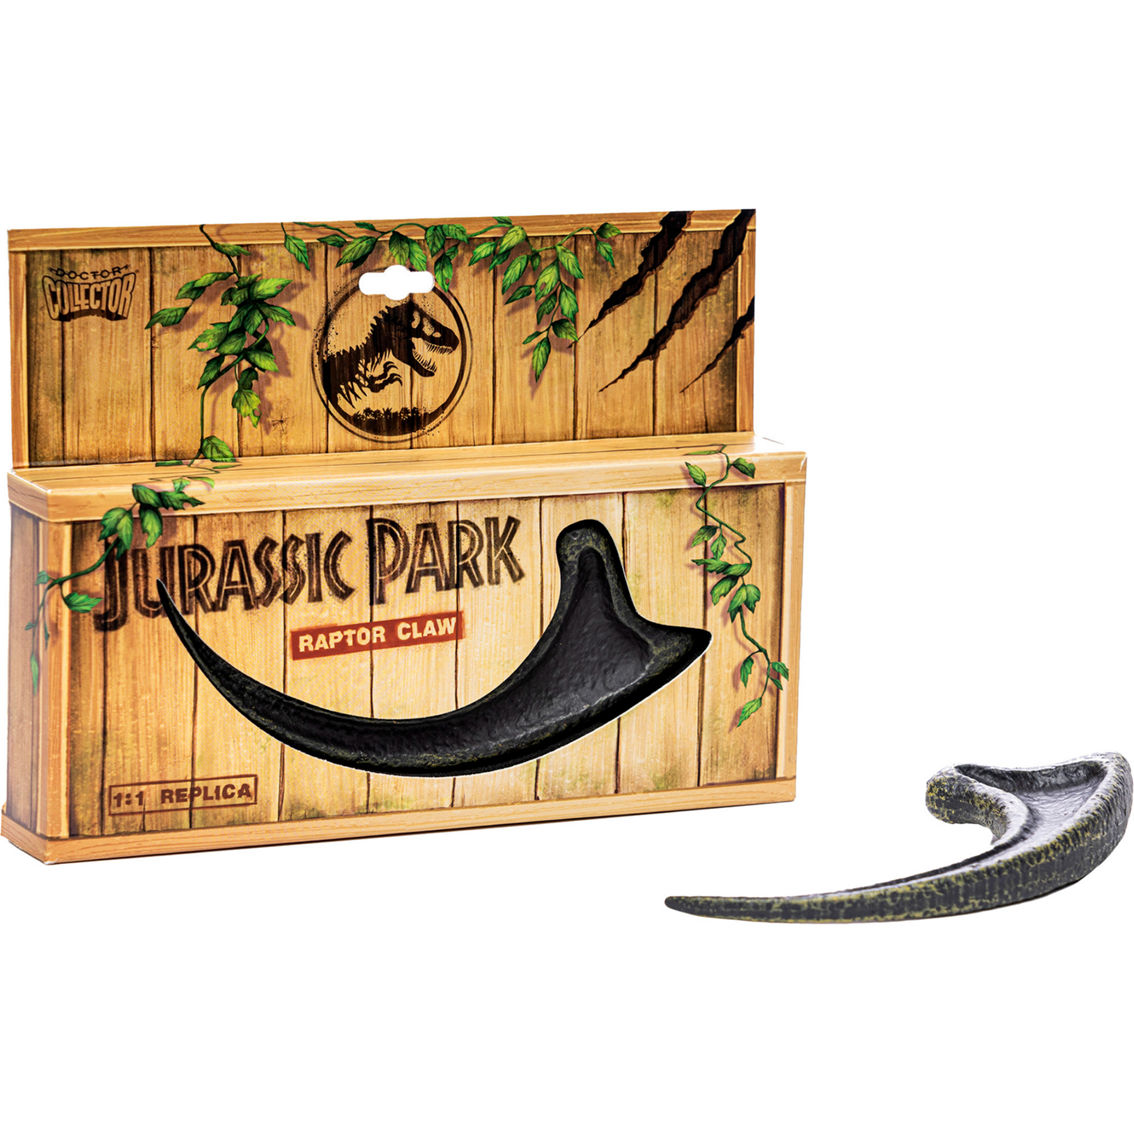 Jurassic Park Raptor Claw - Image 2 of 5